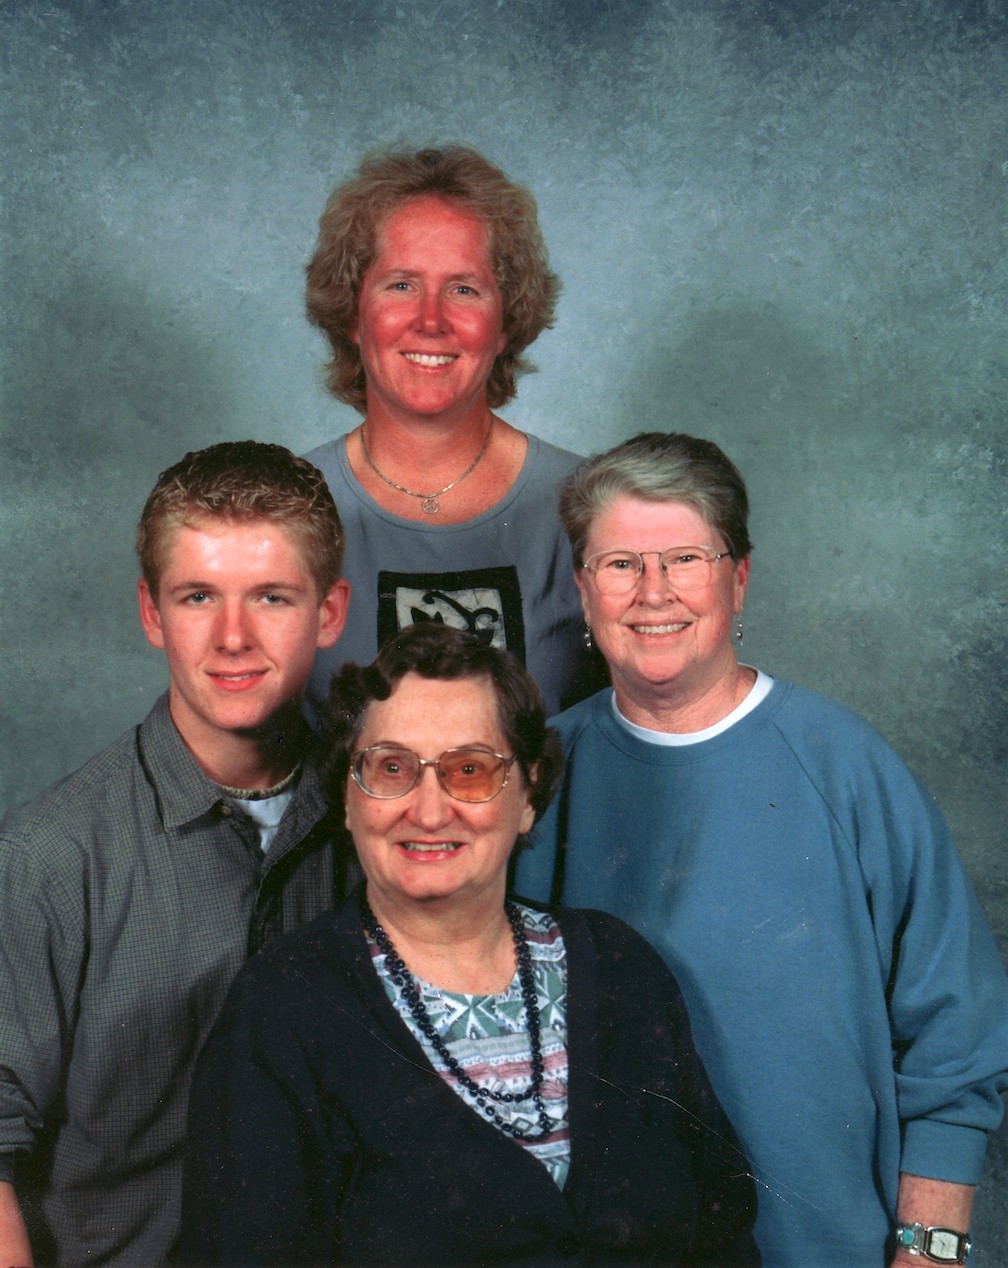 A church directory portrait of Jennifer Crossen, Joan Callahan (her partner), David Crossen (her son), and Betsy Churchill (her mother) in Lexington, KY, 2002.